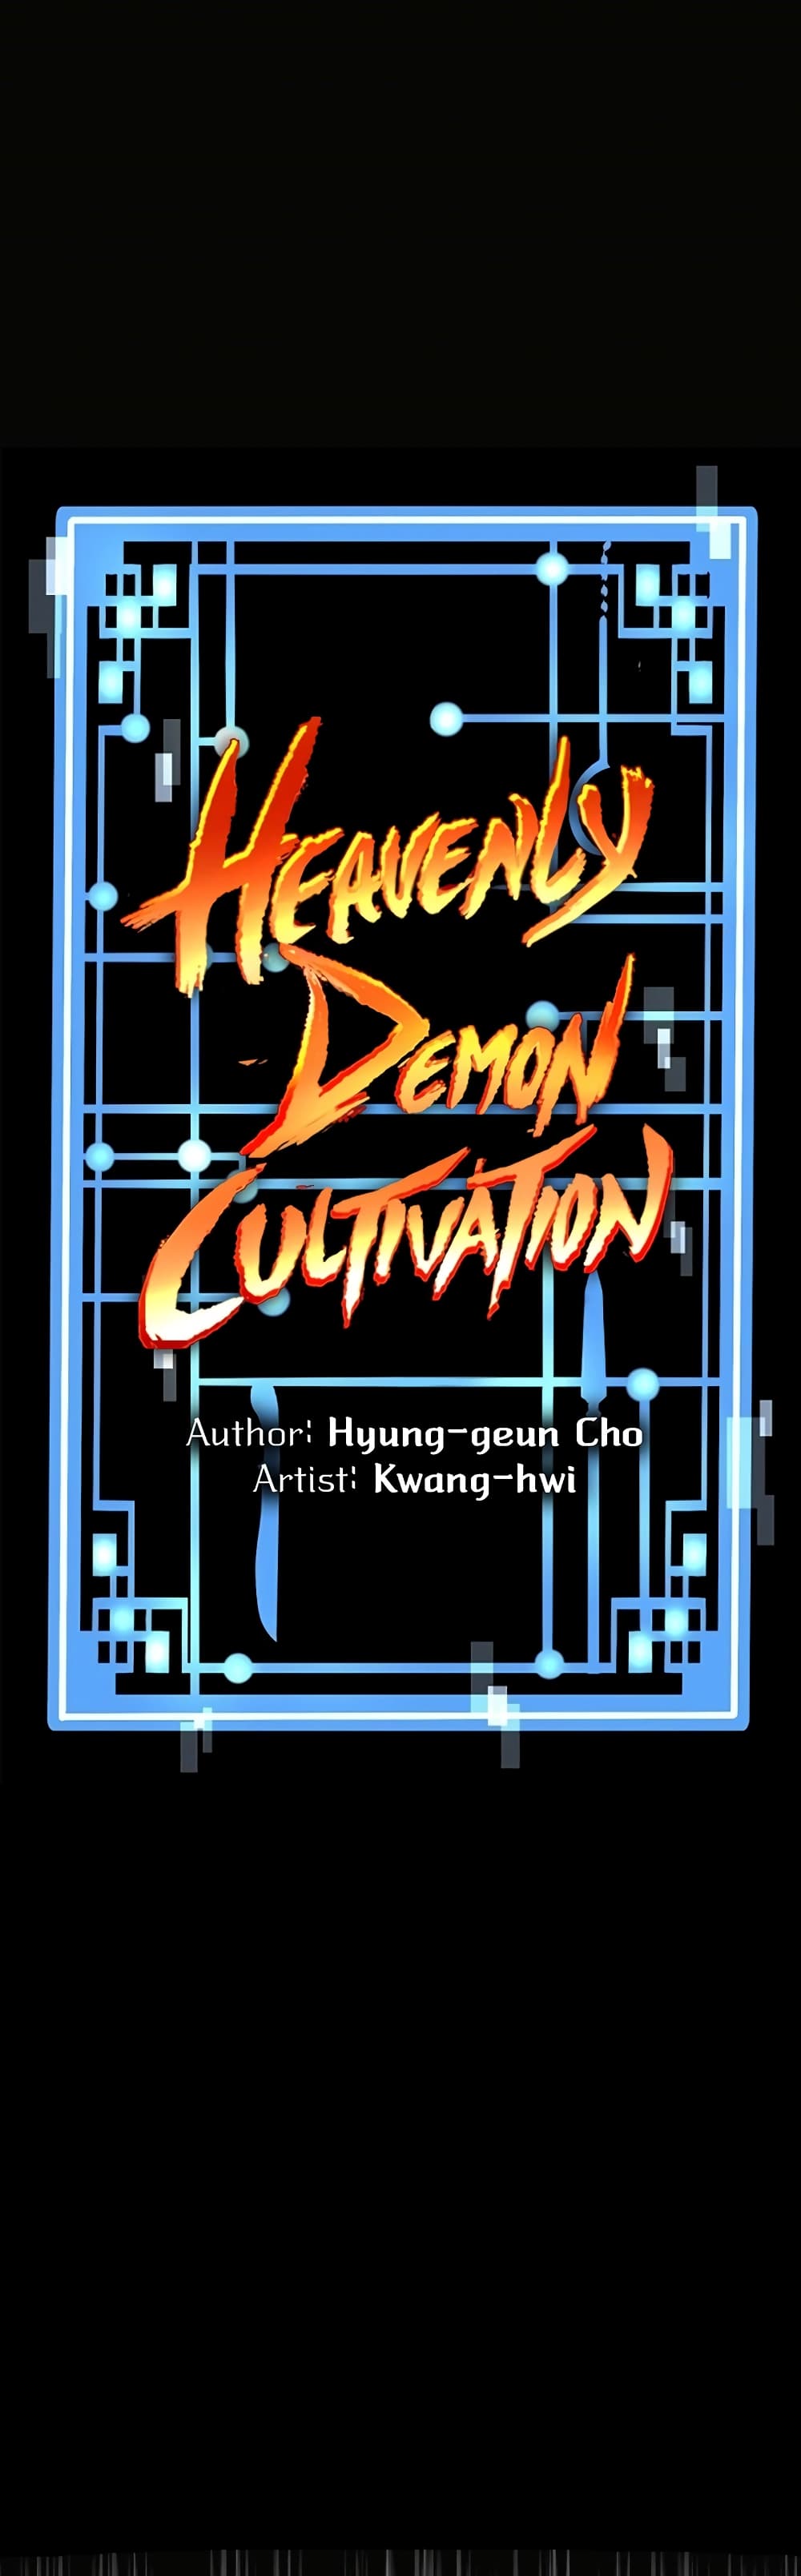 Heavenly Demon Cultivation Simulation 31-31